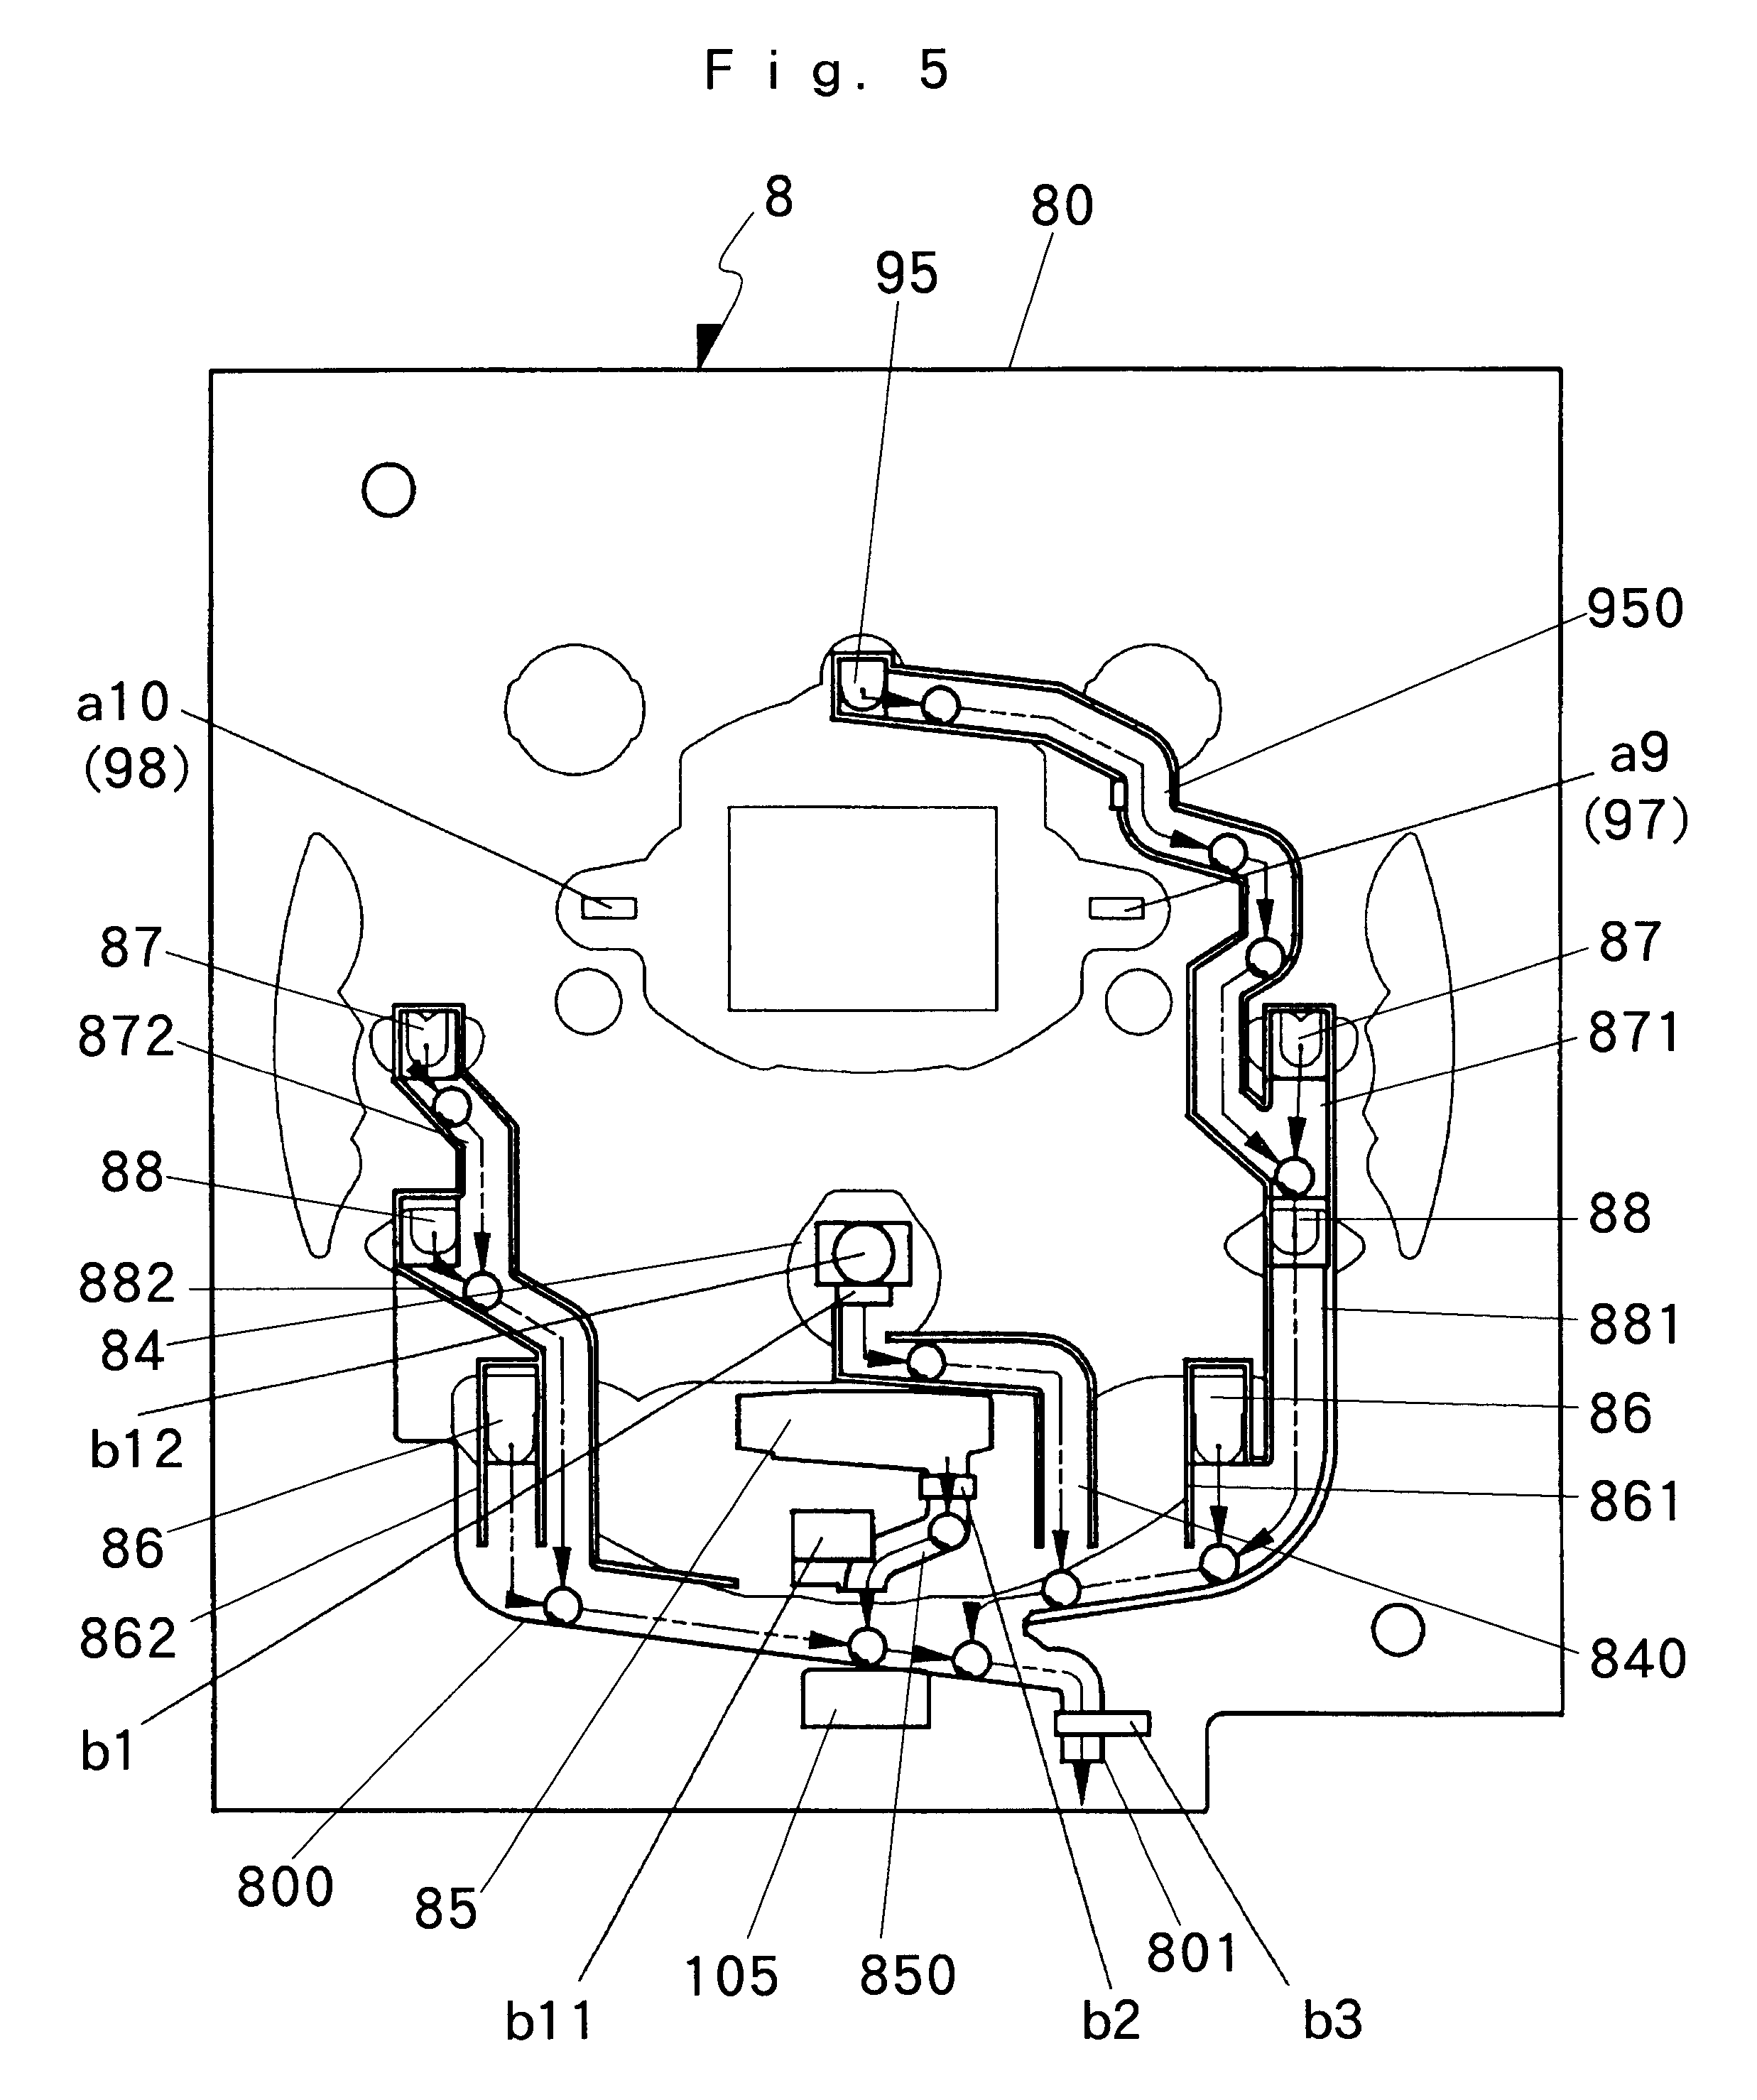 Wiring Diagram For Honda Recon Atv